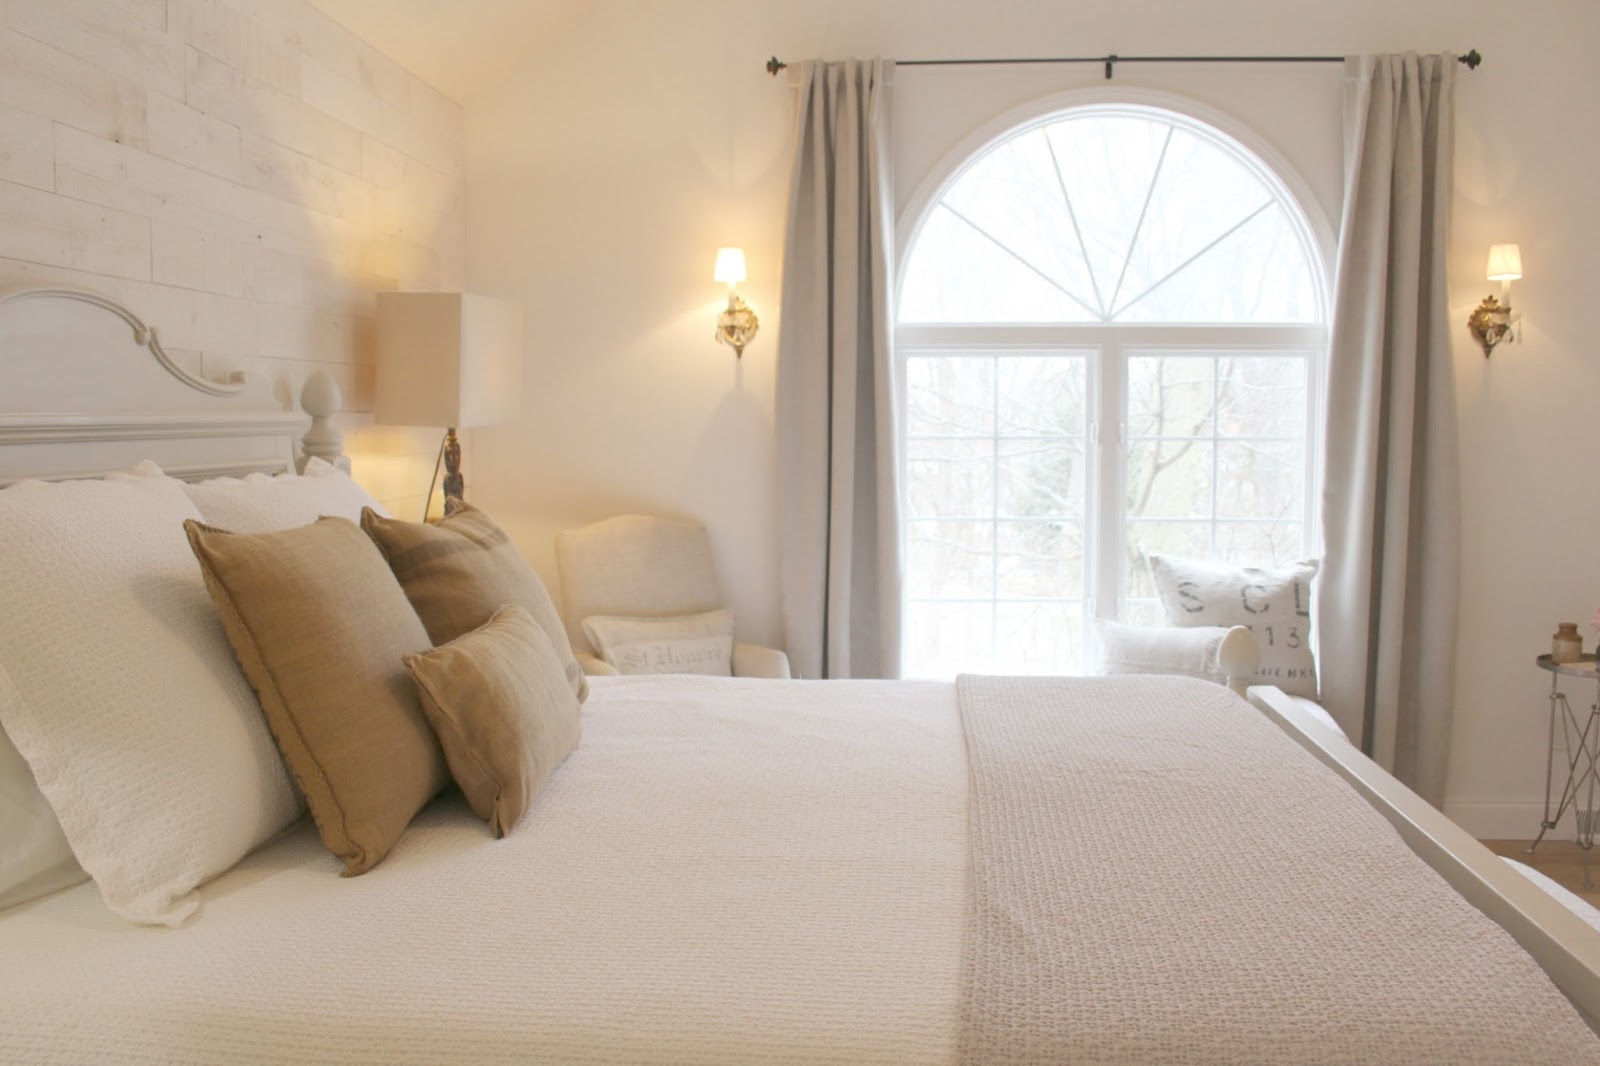 Nordic farmhouse style in master bedroom of Hello Lovely Studio fixer upper